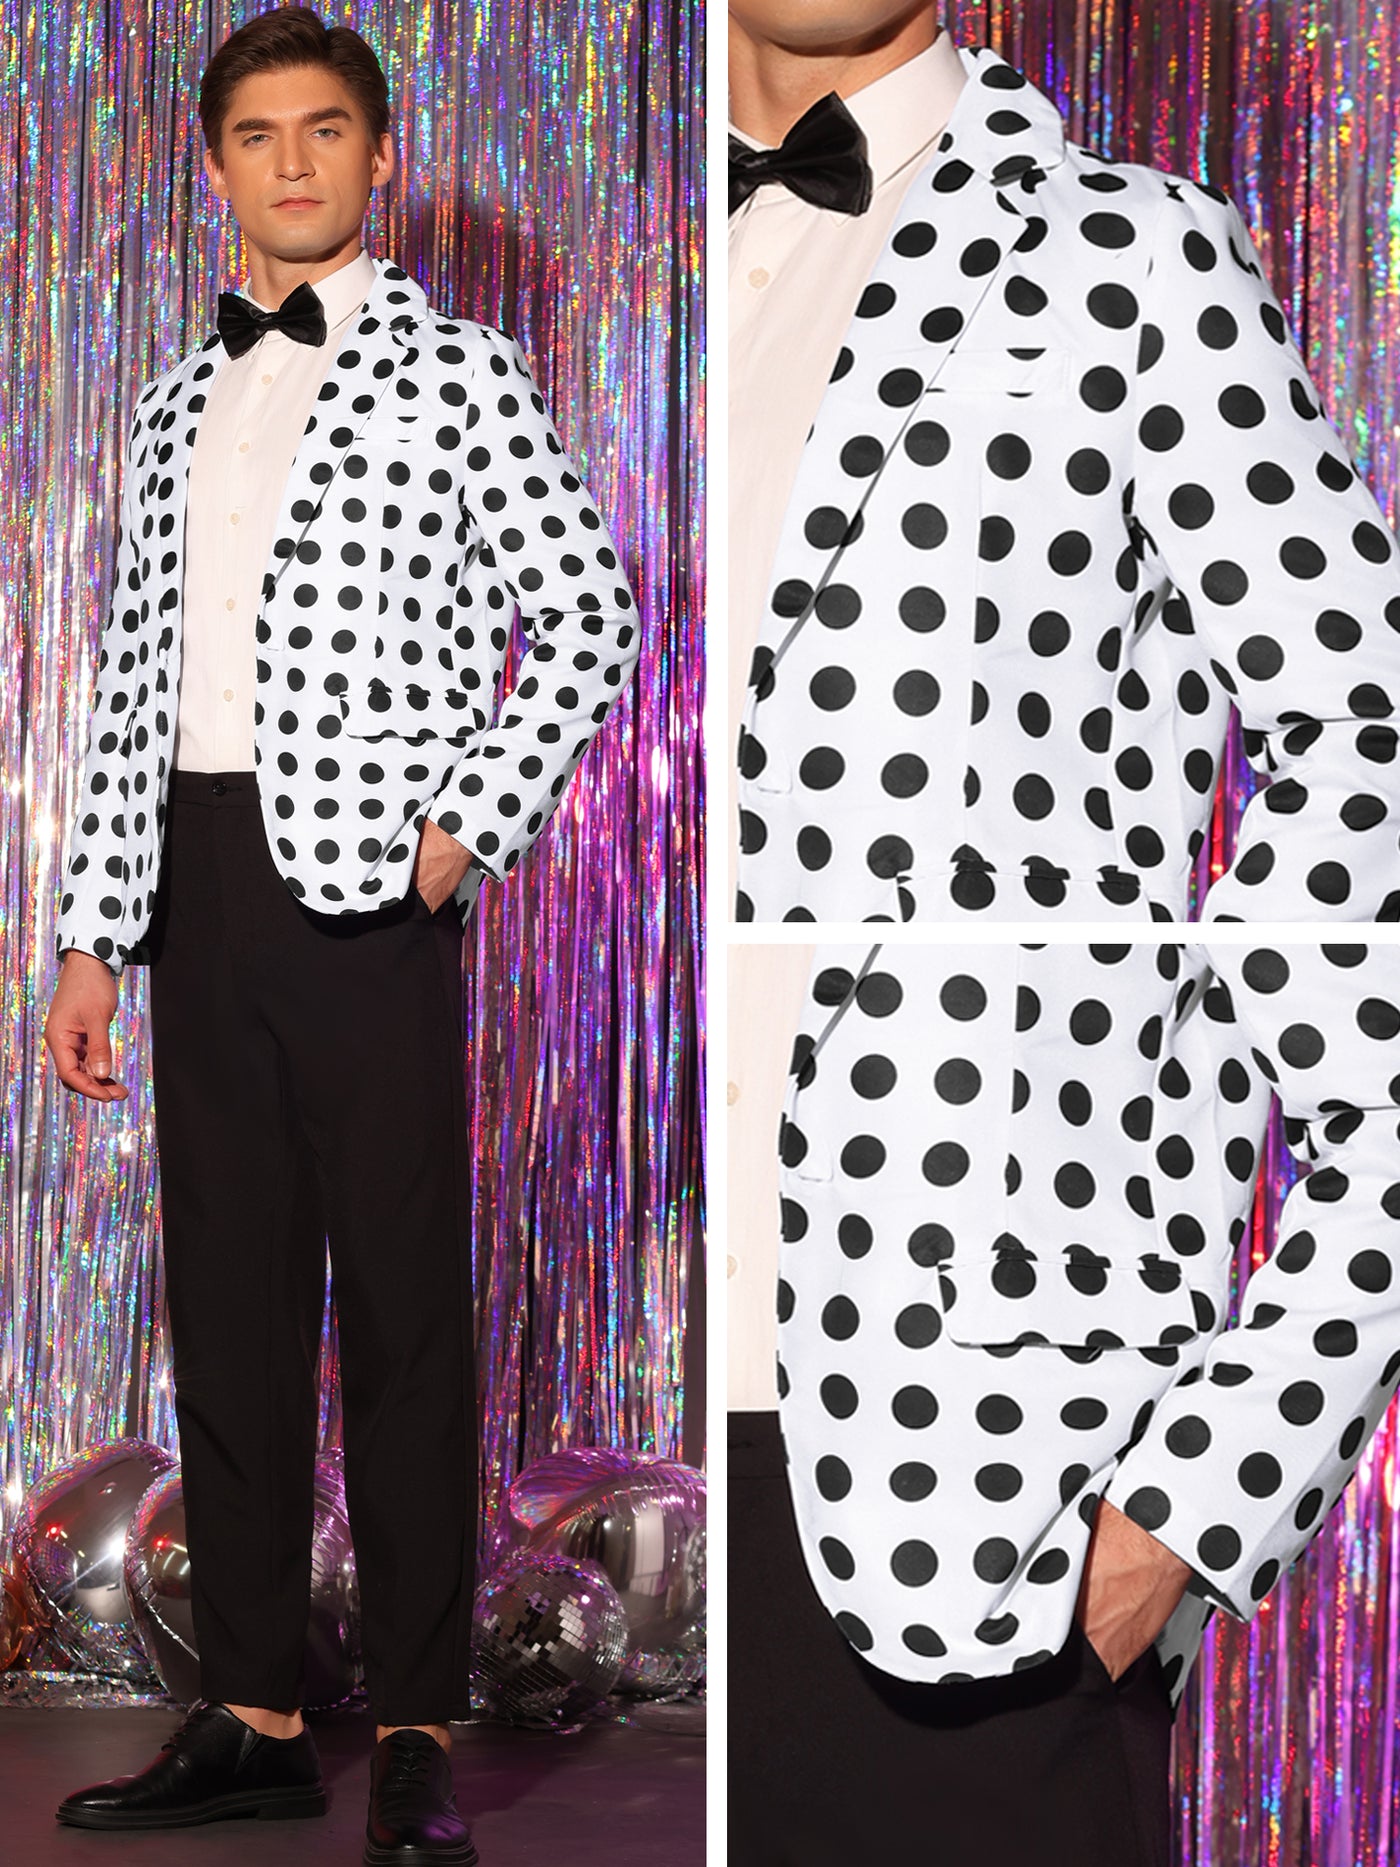 Bublédon Polka Dots Blazers for Men's Notch Lapel One Button Wedding Suit Jacket Sports Coats